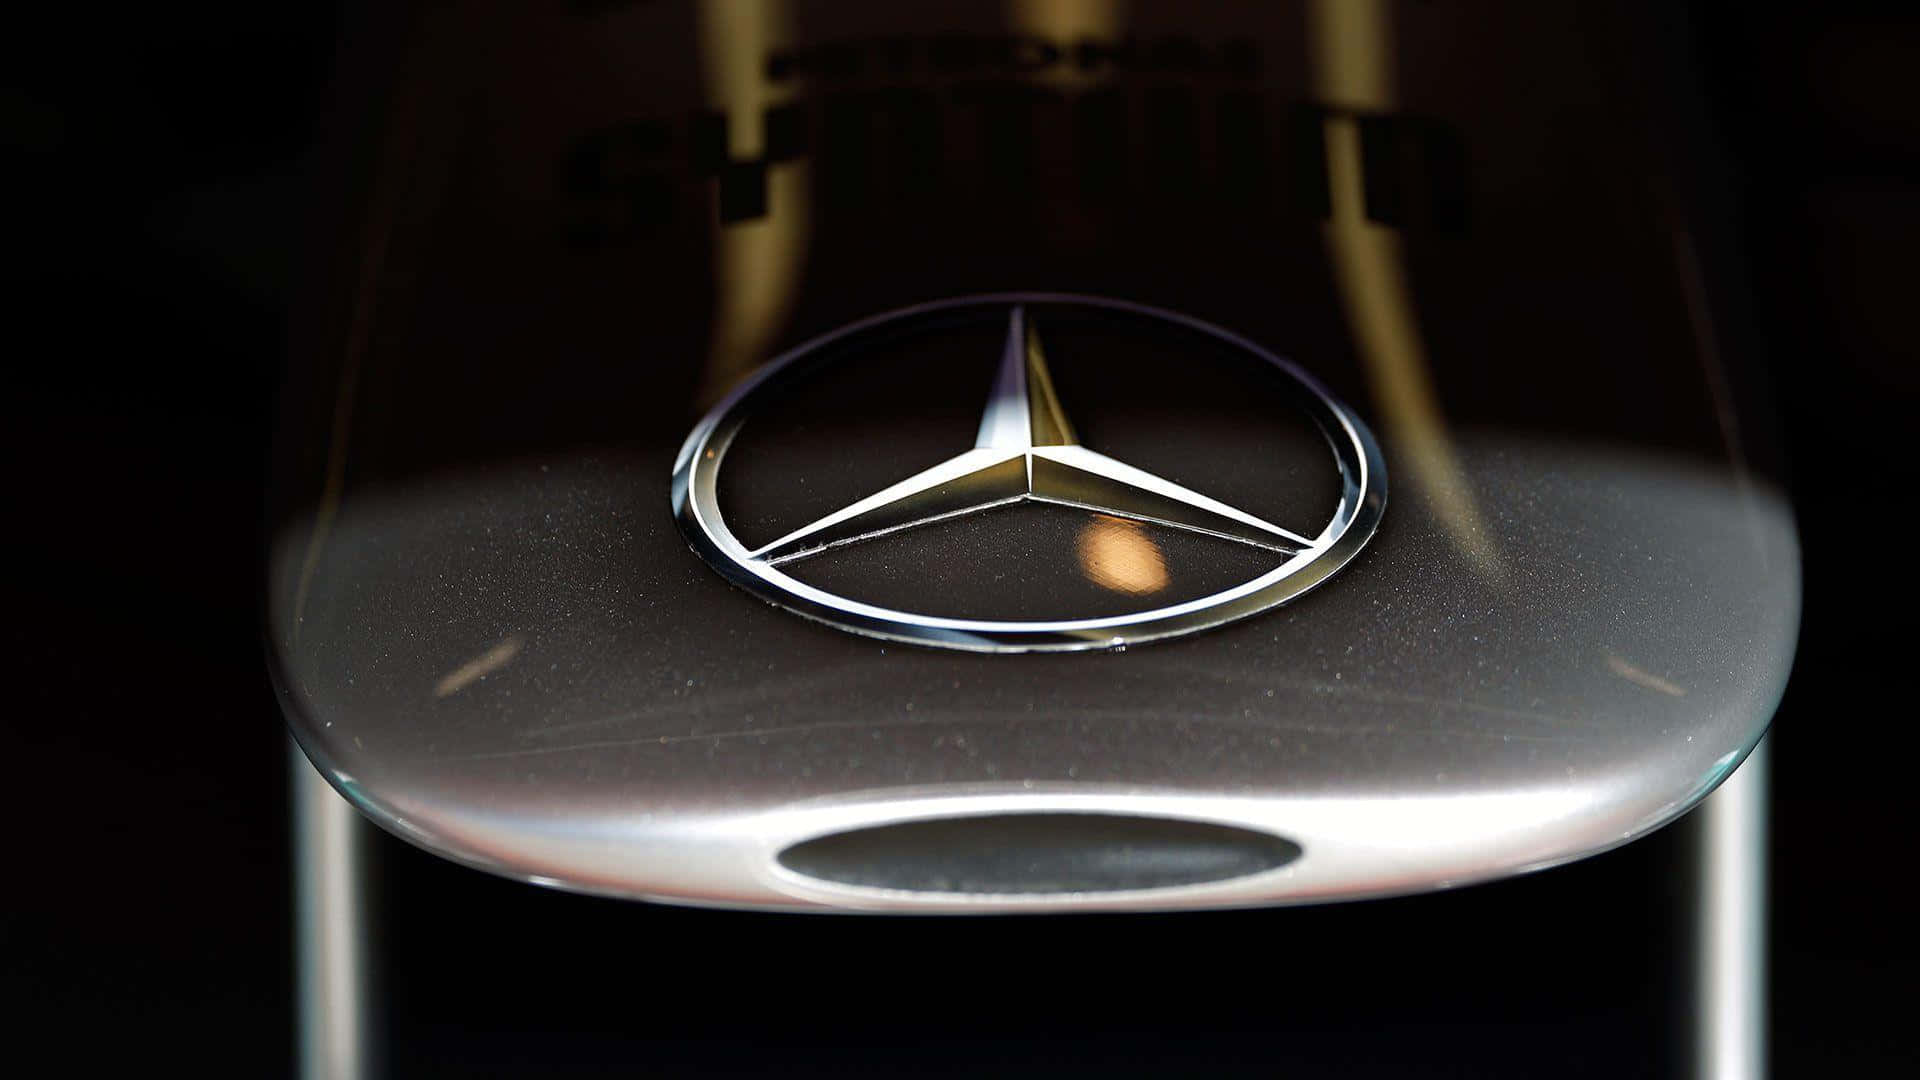 Mercedes Benz Logo On A Car